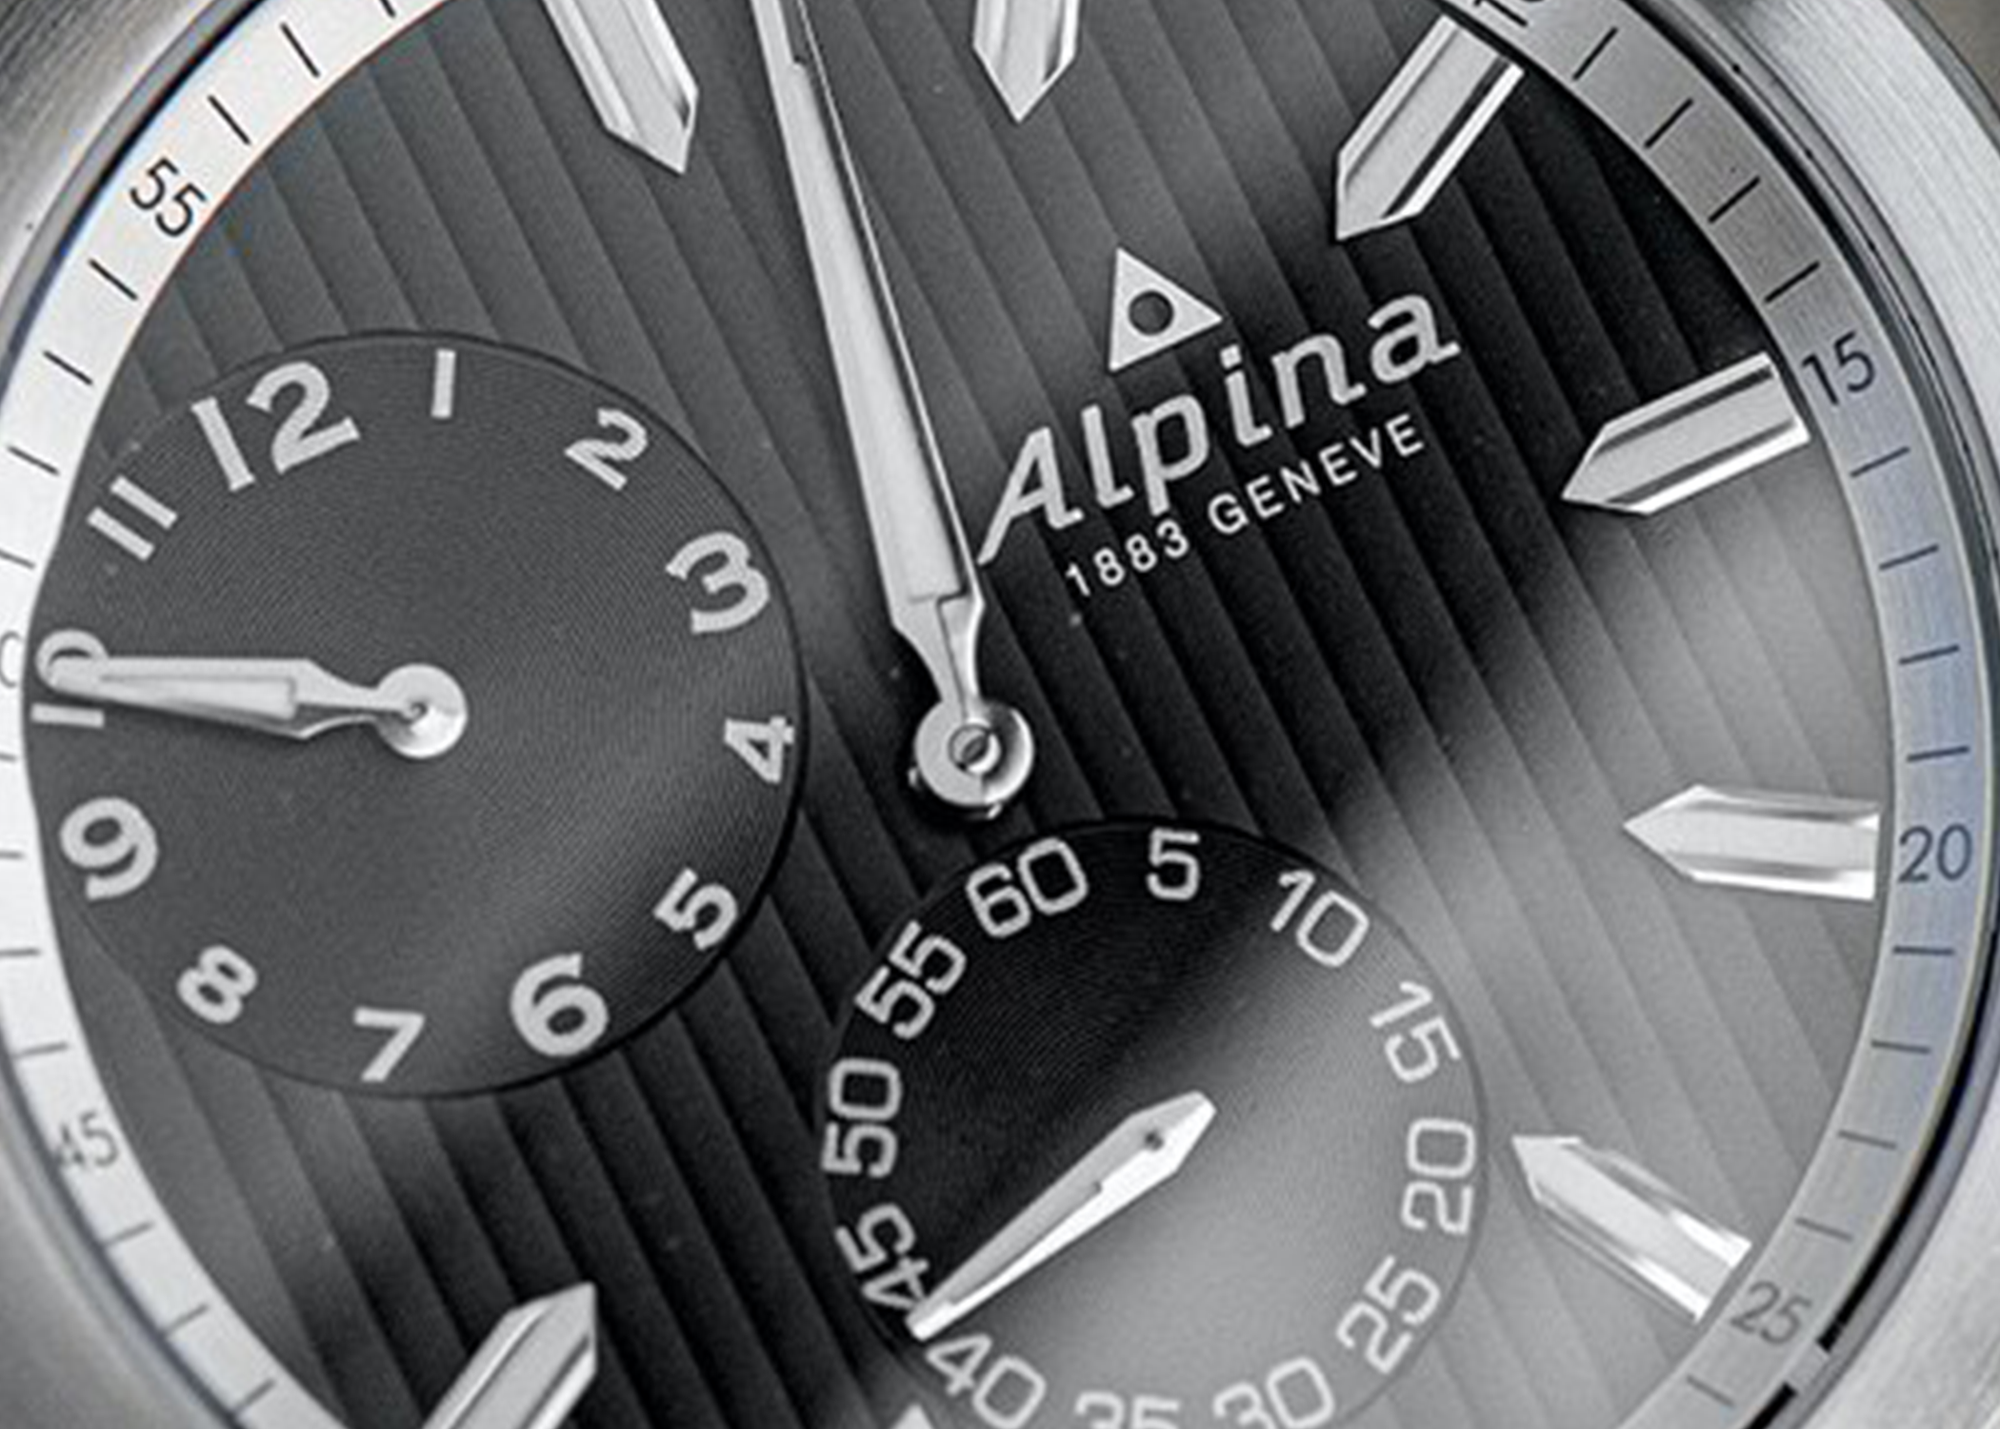 Alpina Regulator Automatic